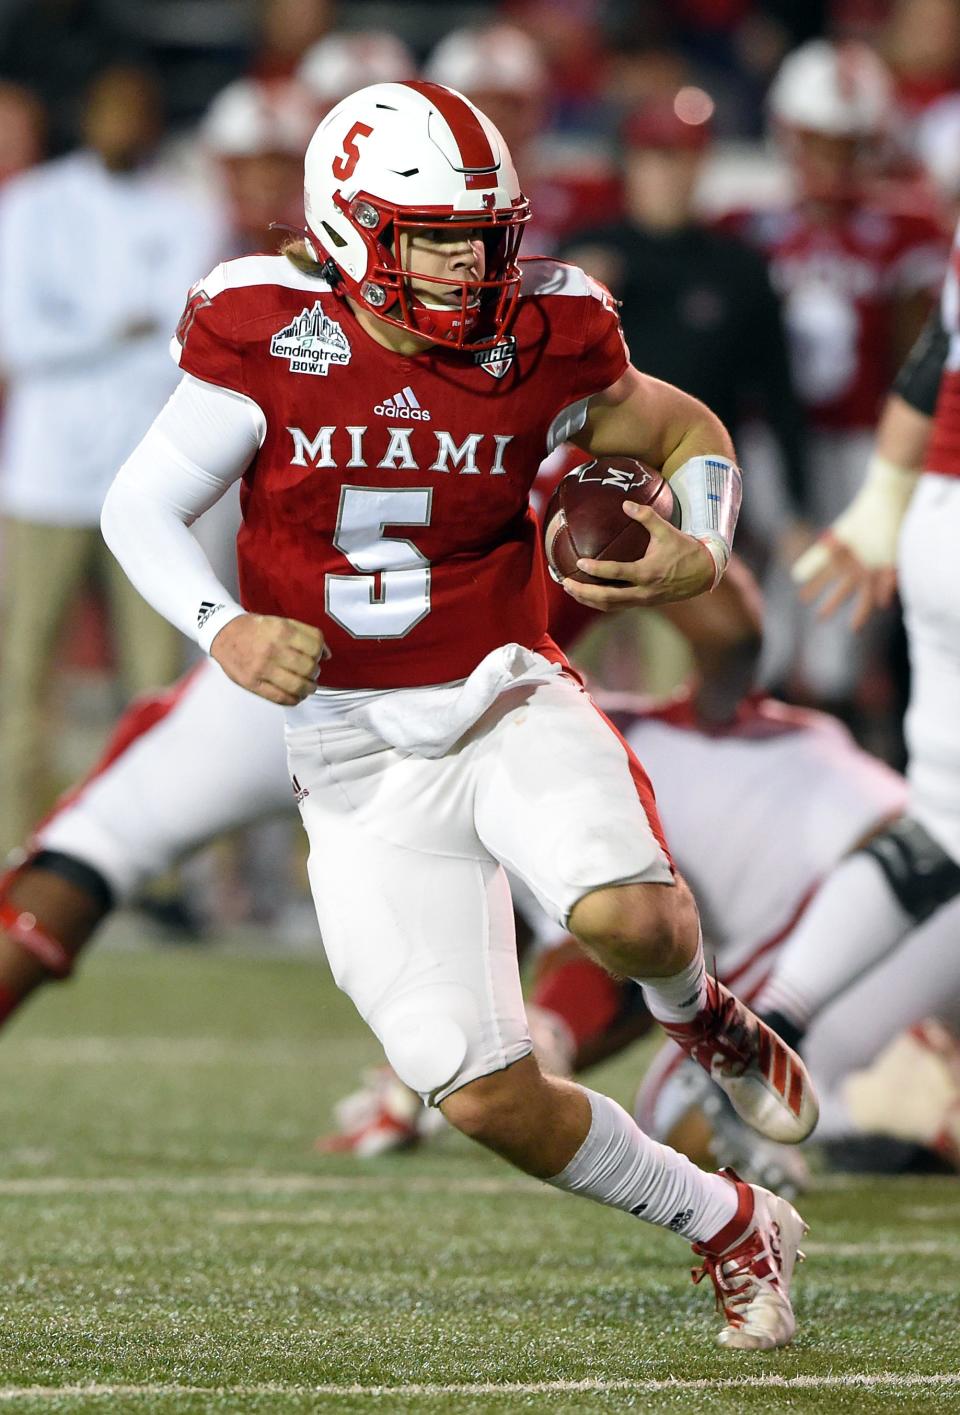 Brett Gabbert, brother of NFL quarterback Blaine Gabbert, is the redshirt Junior quarterback for the Miami RedHawks.